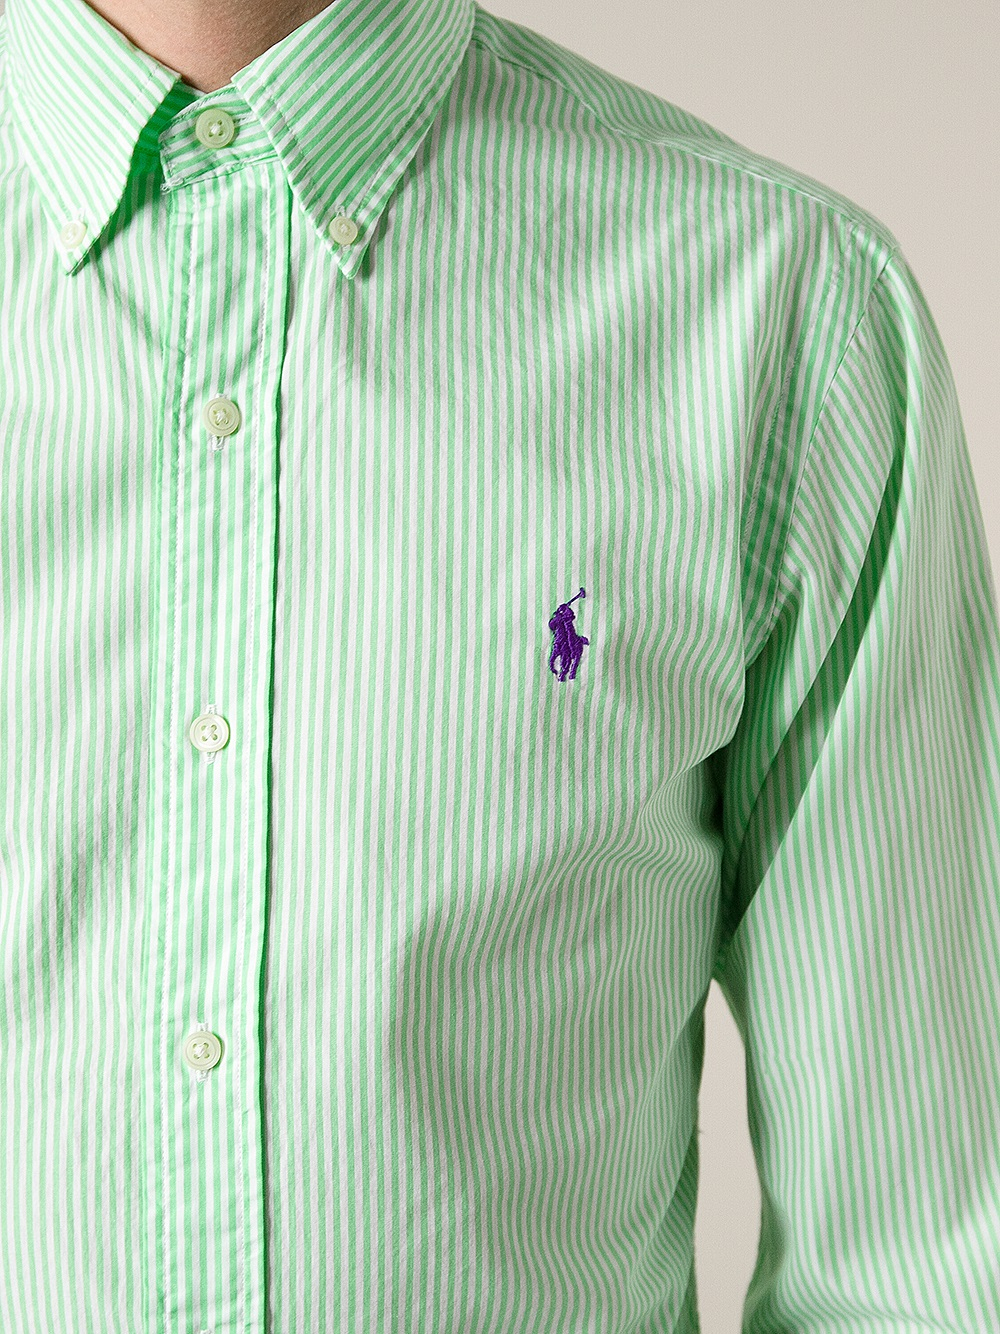 Lyst - Polo Ralph Lauren Classic Striped Shirt in Green for Men